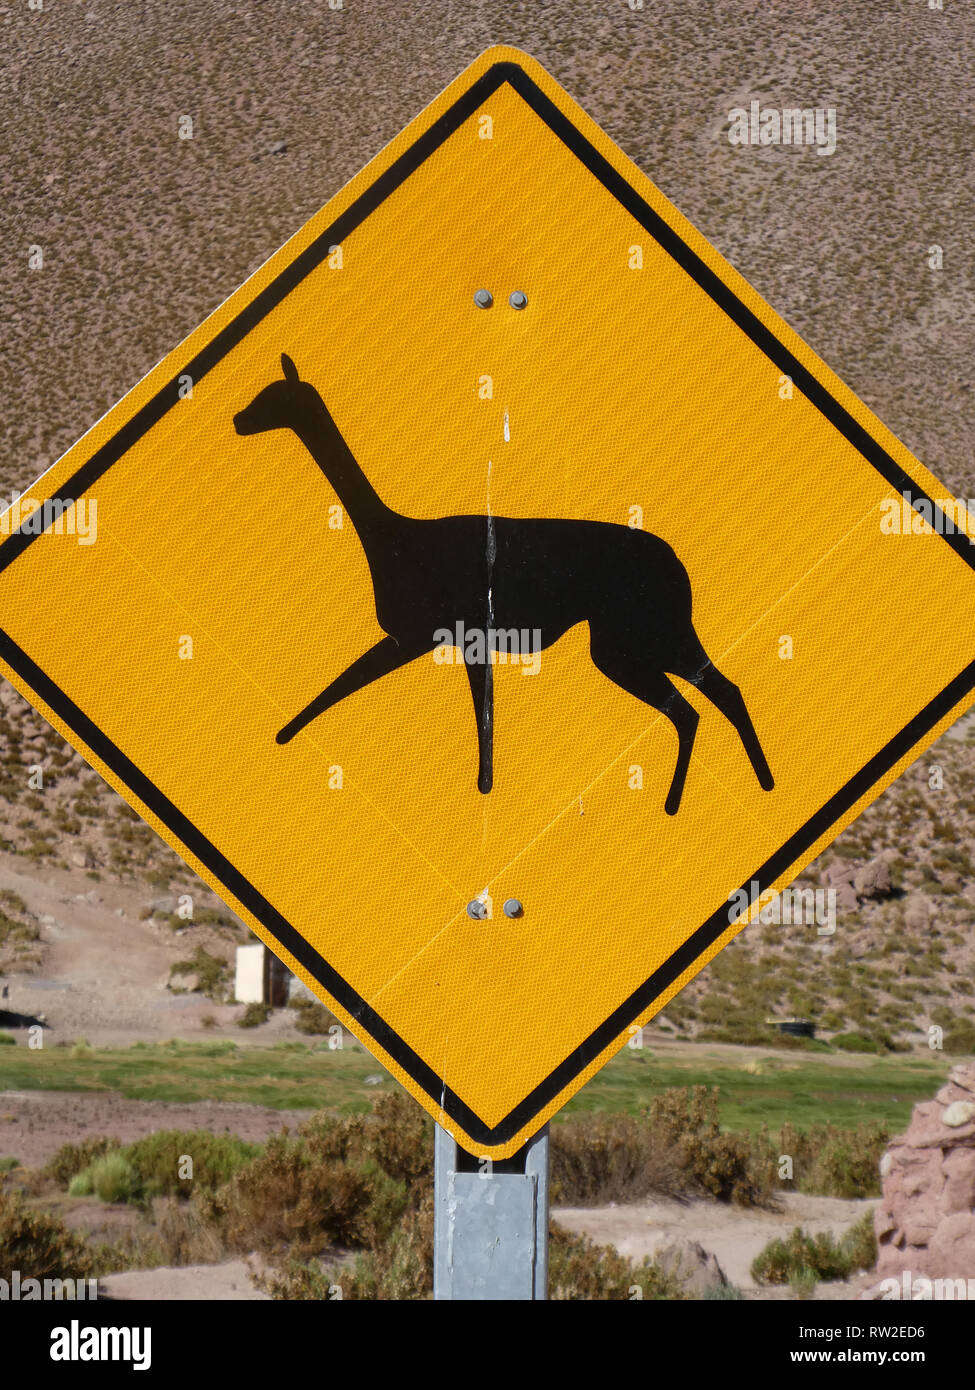 Llama avvertenza cartello stradale in Cile 2019 Foto Stock